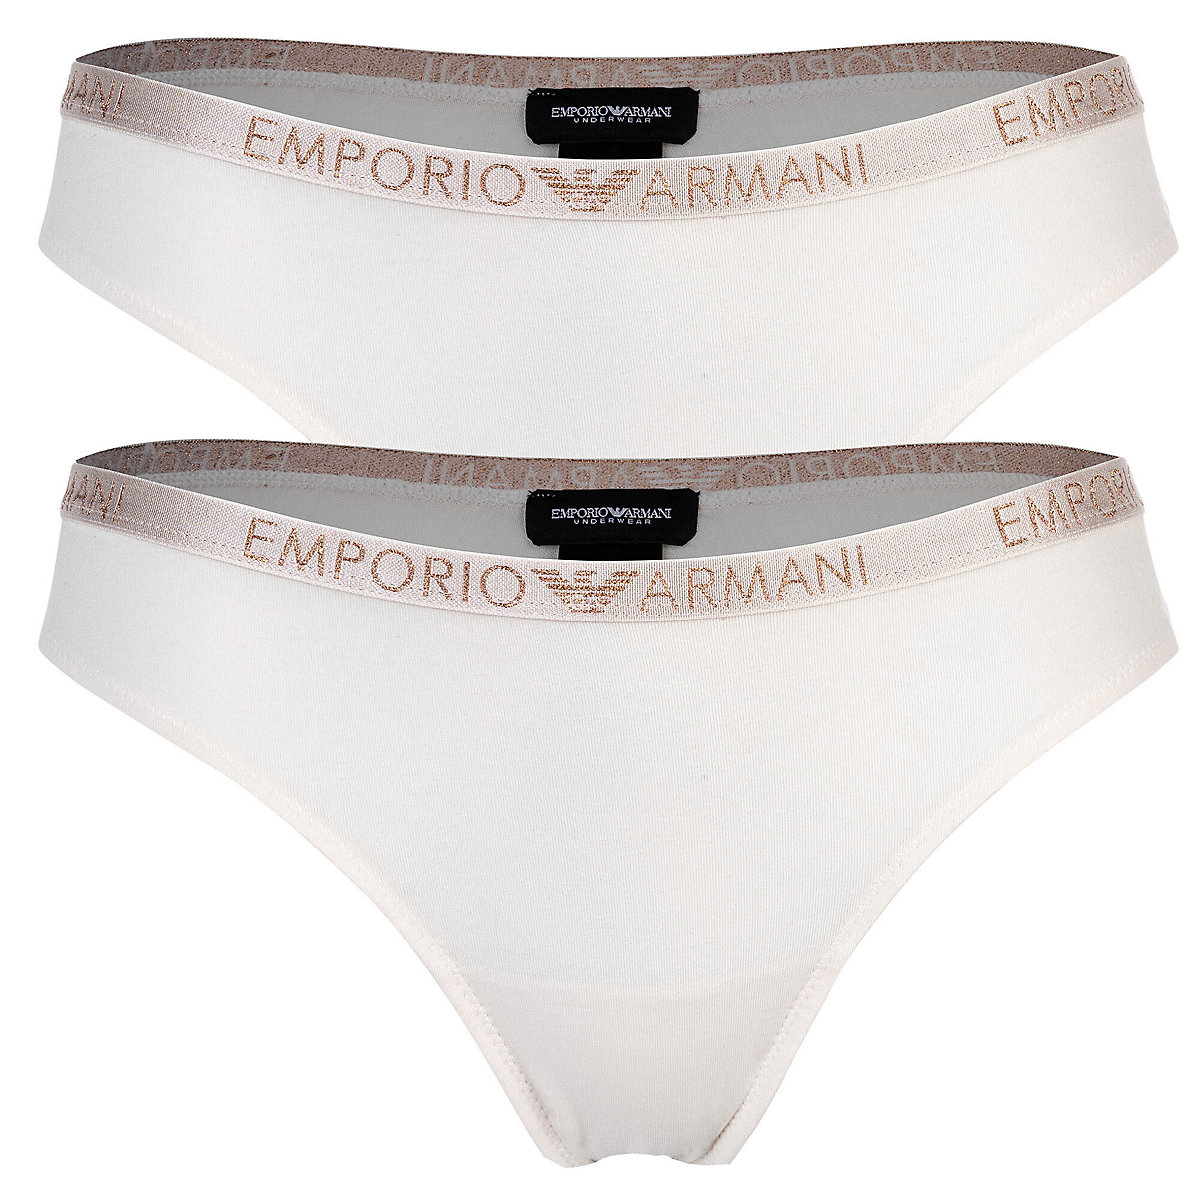 Emporio Armani Damen Brazilian Briefs 2er Pack Slips Stretch Cotton Slips creme